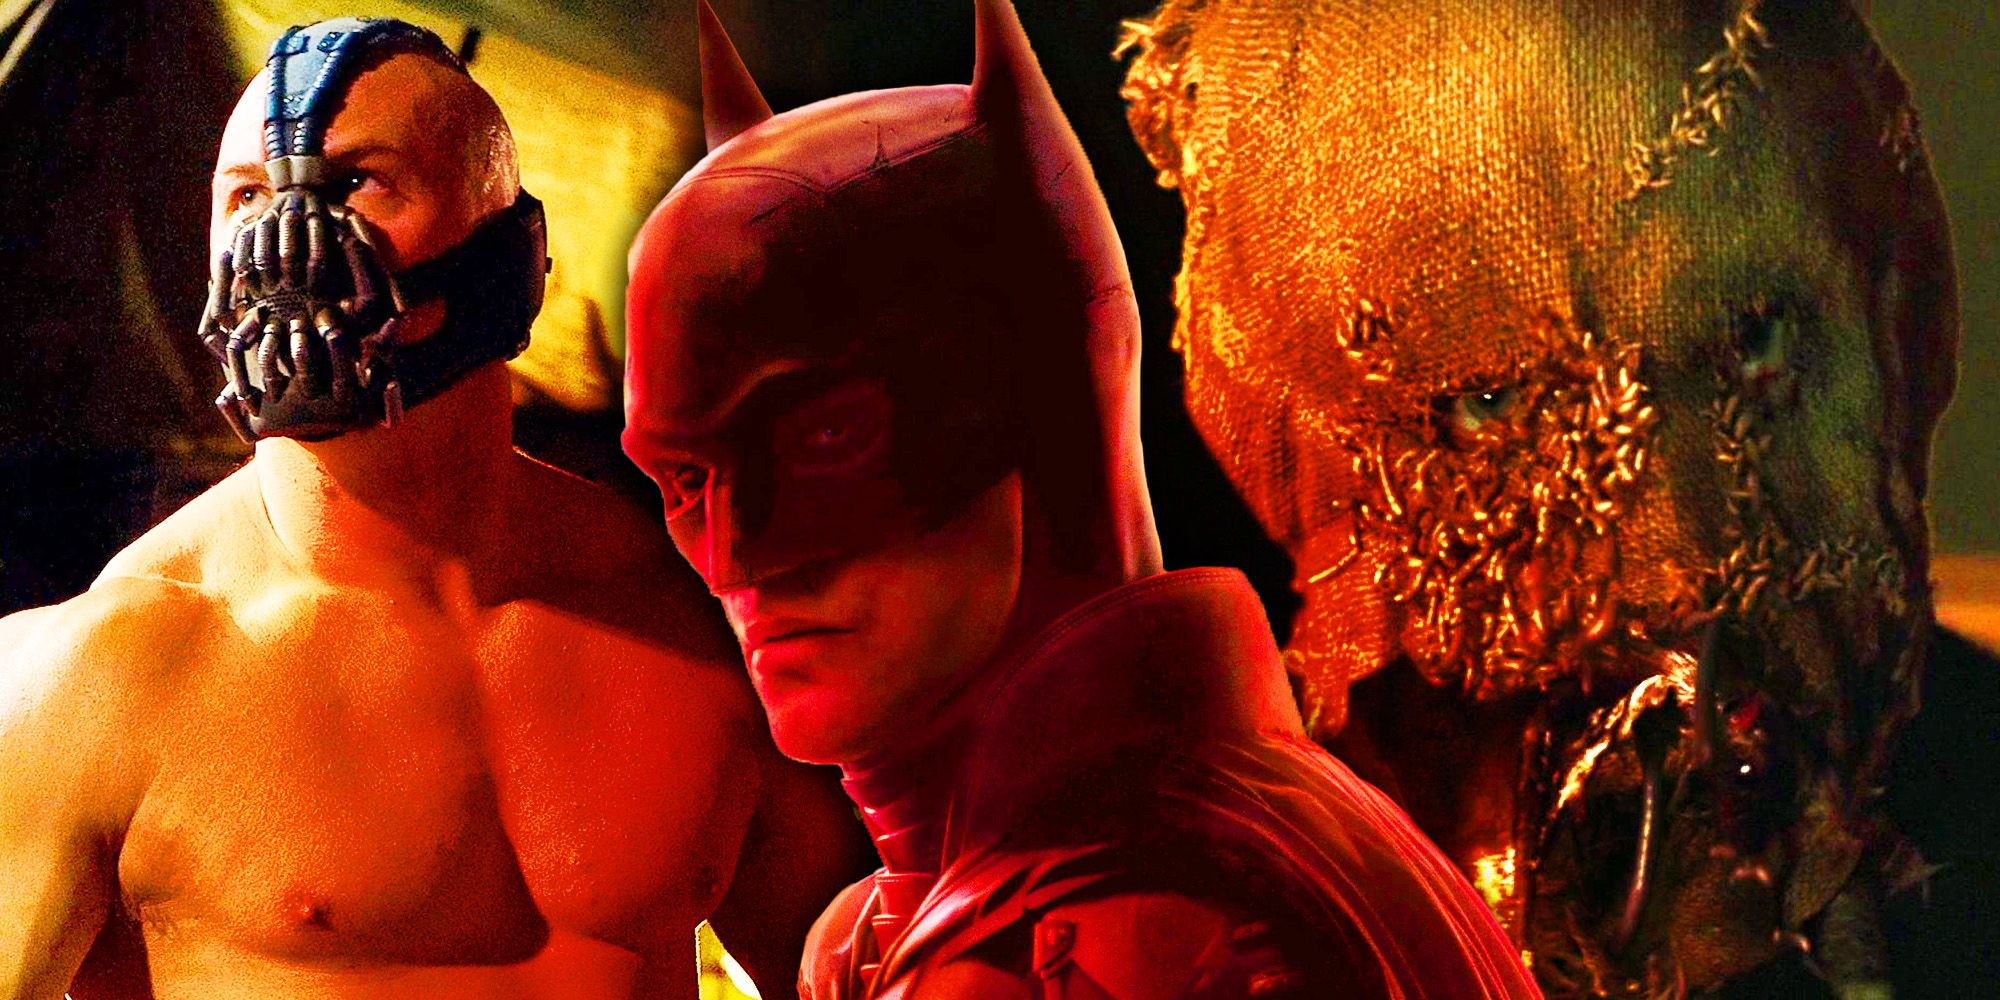 The Dark Knight Rises' Bane next to Pattinson's Batman and Batman Begins' Scarecrow